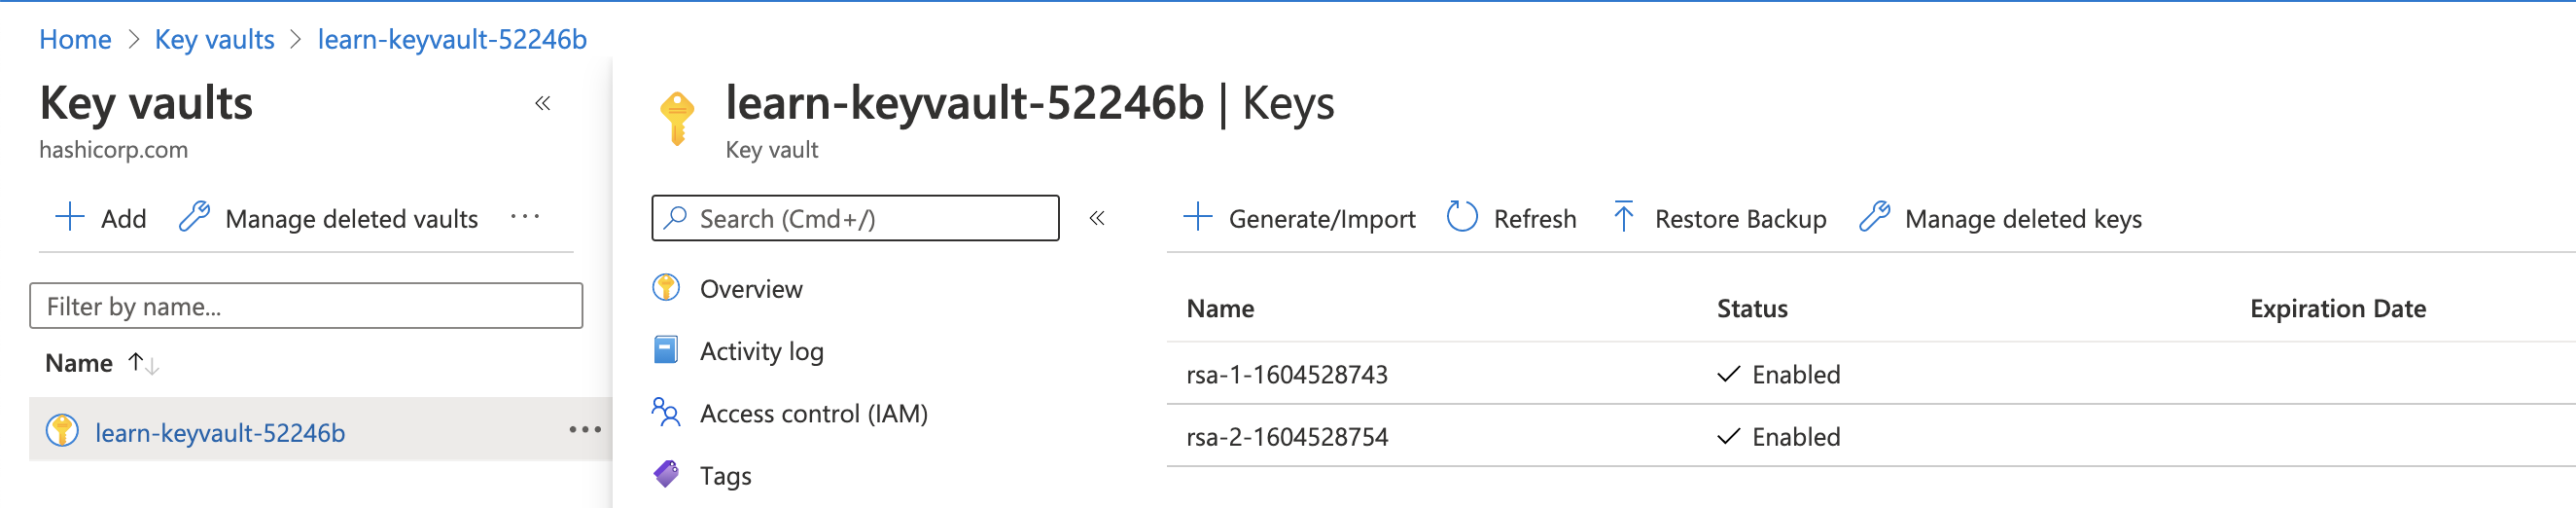 Screenshot showing distribution of keys to Azure Key Vault